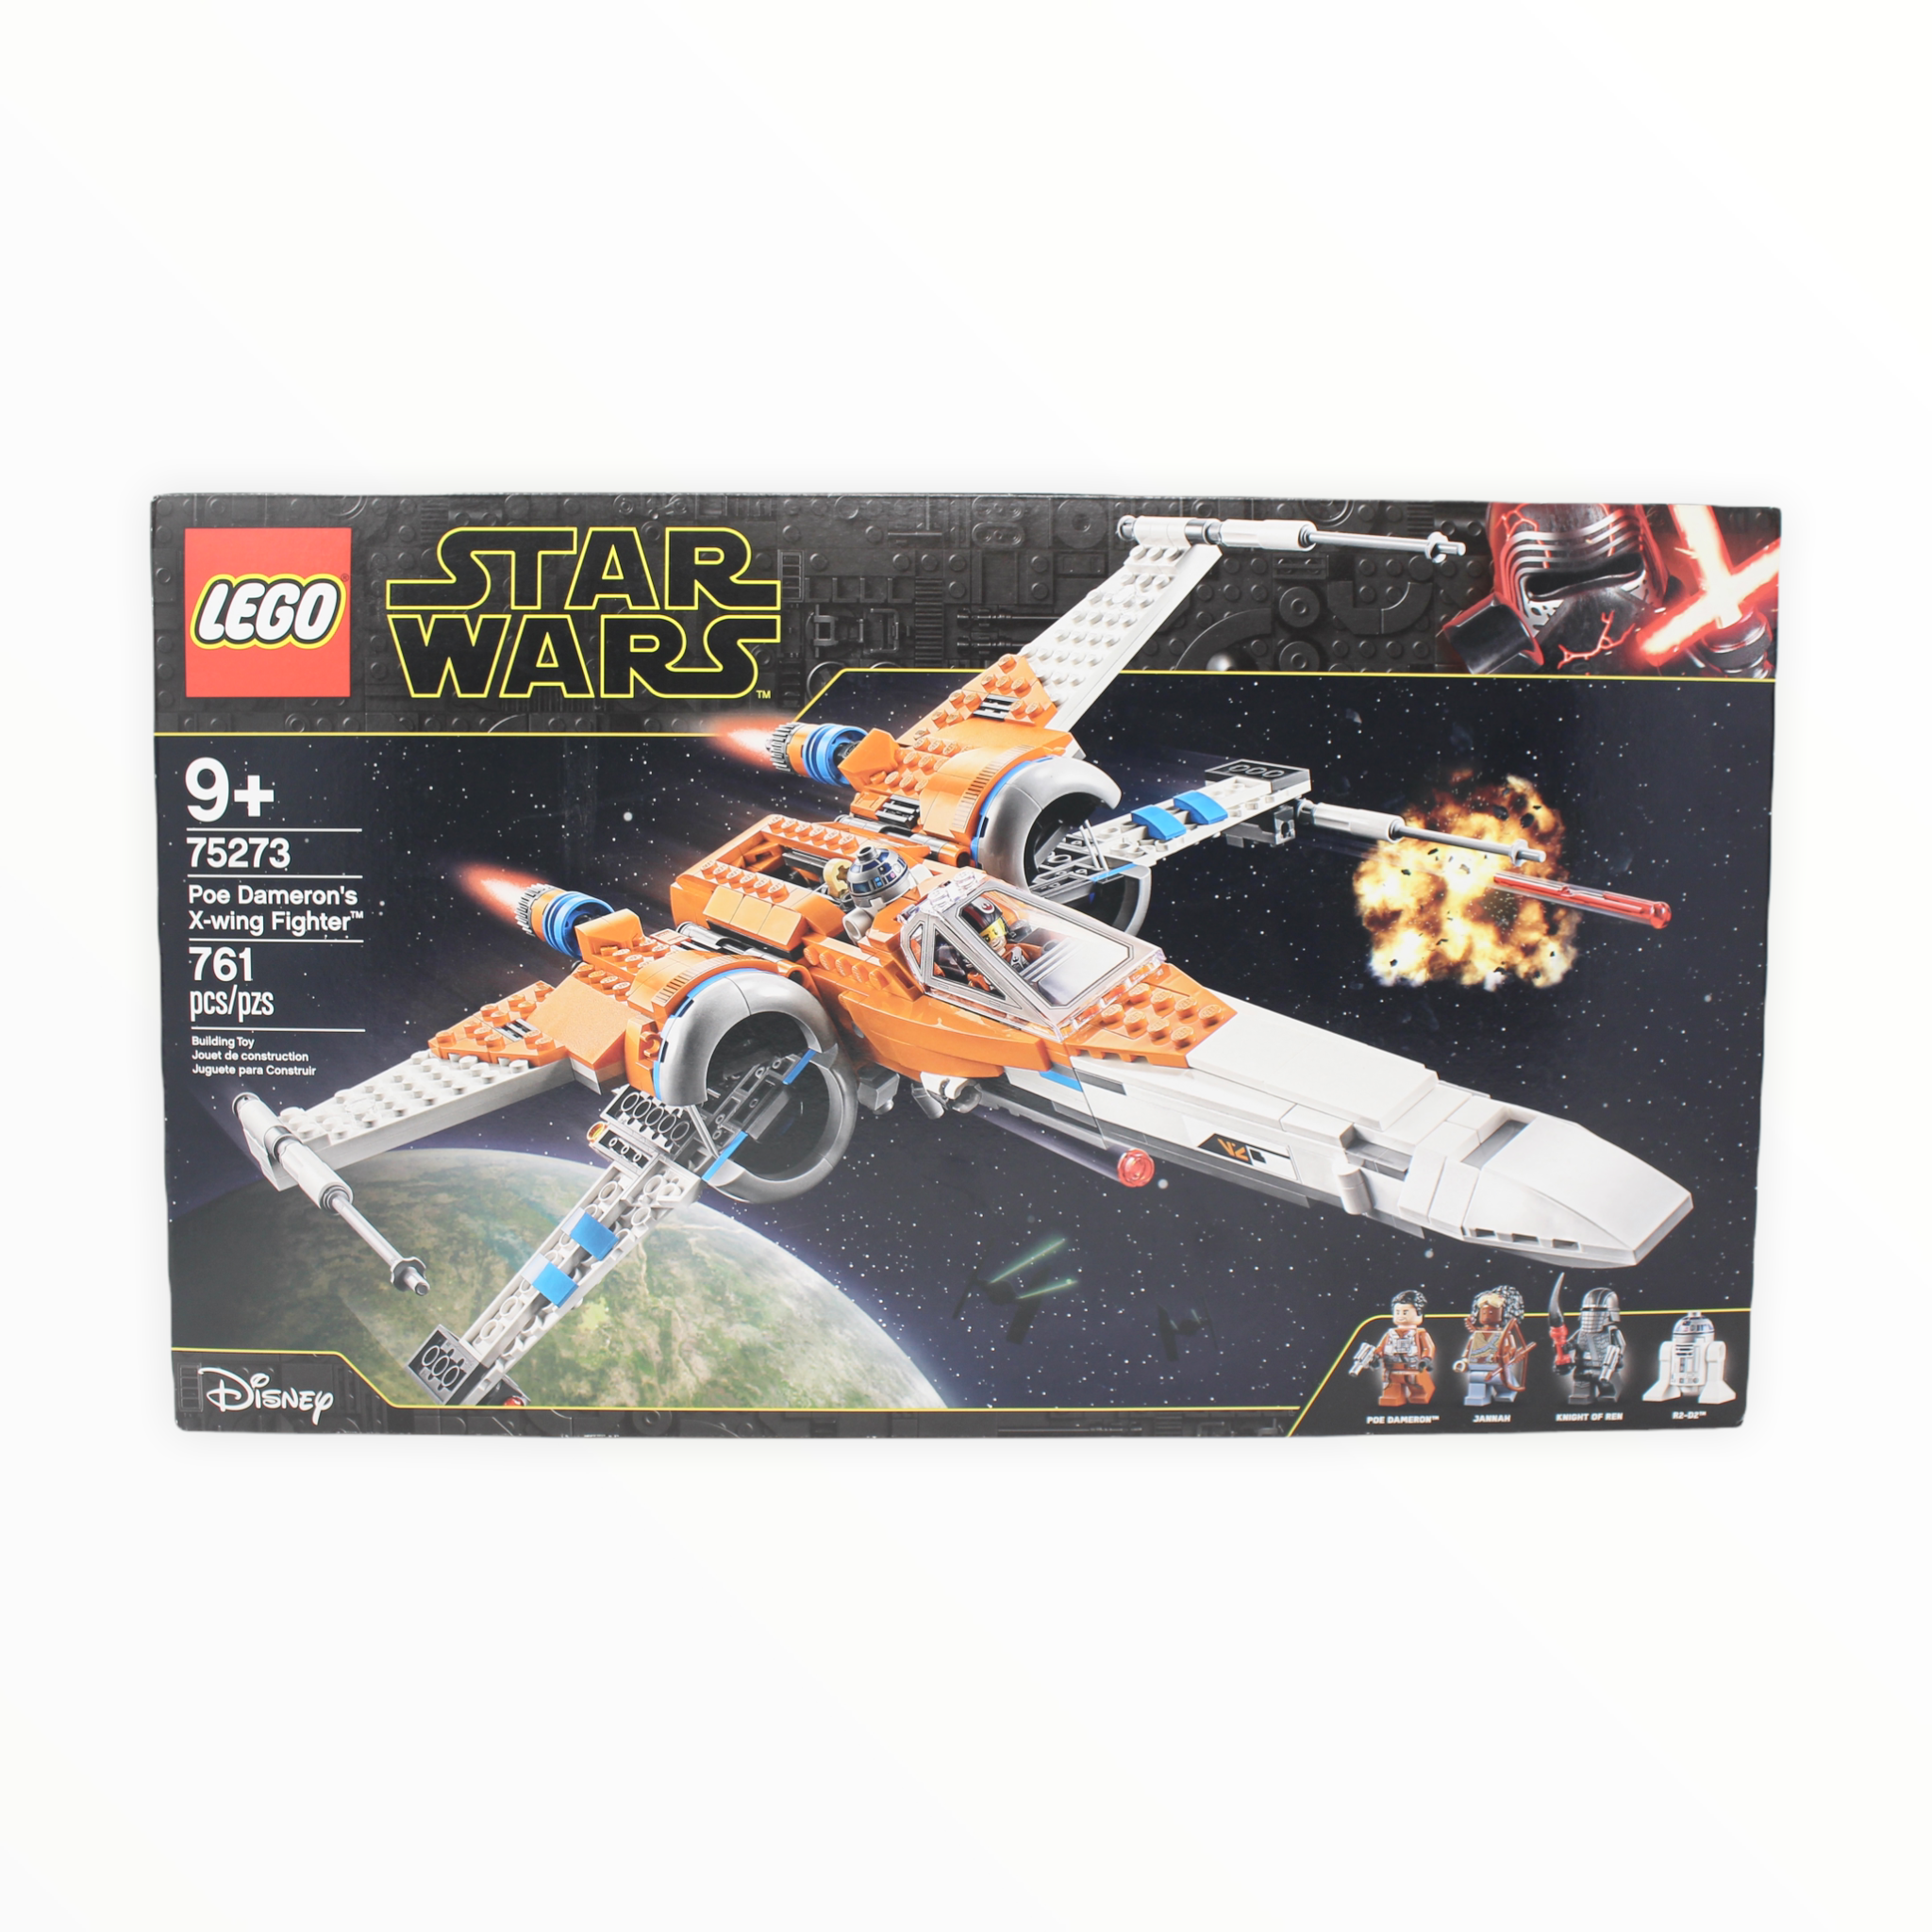 Retired Set 75273 Star Wars Poe Dameron’s X-wing Fighter